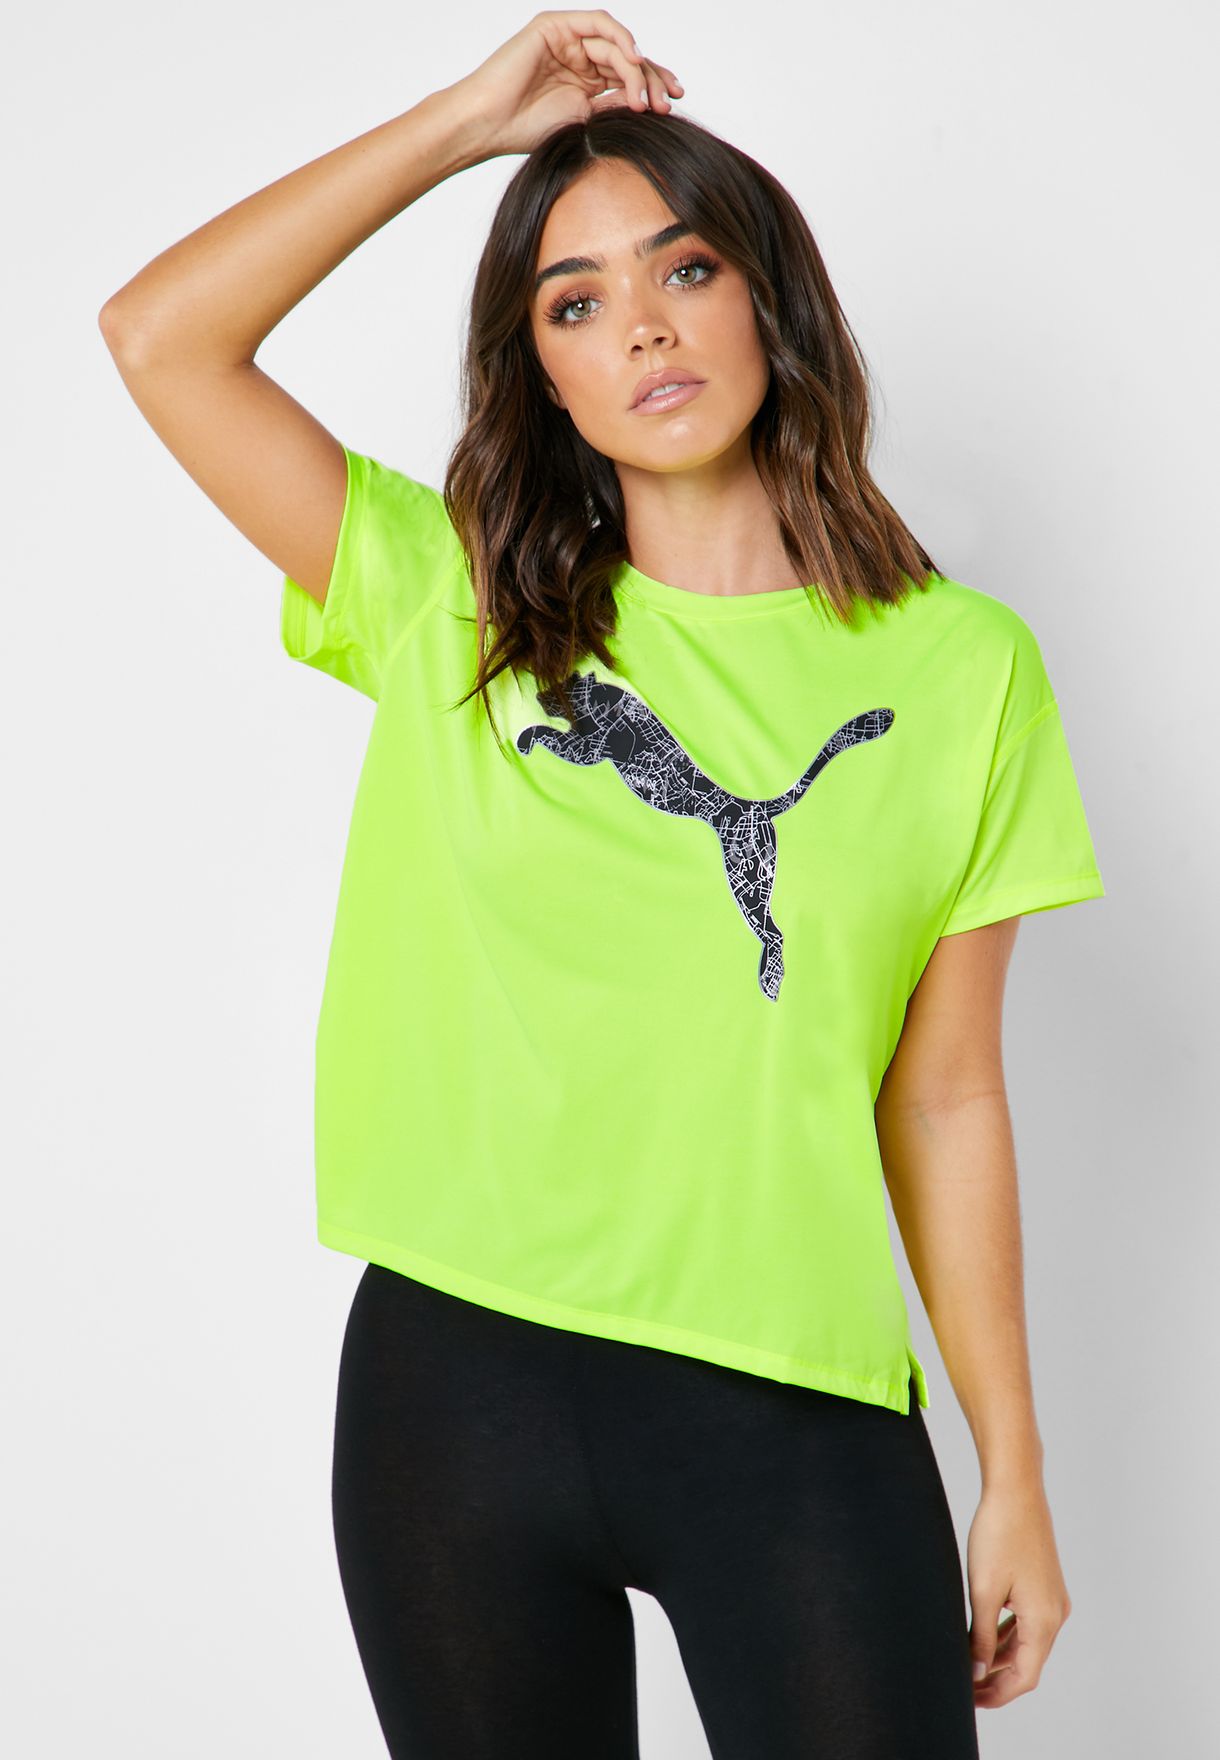 neon green puma shirt